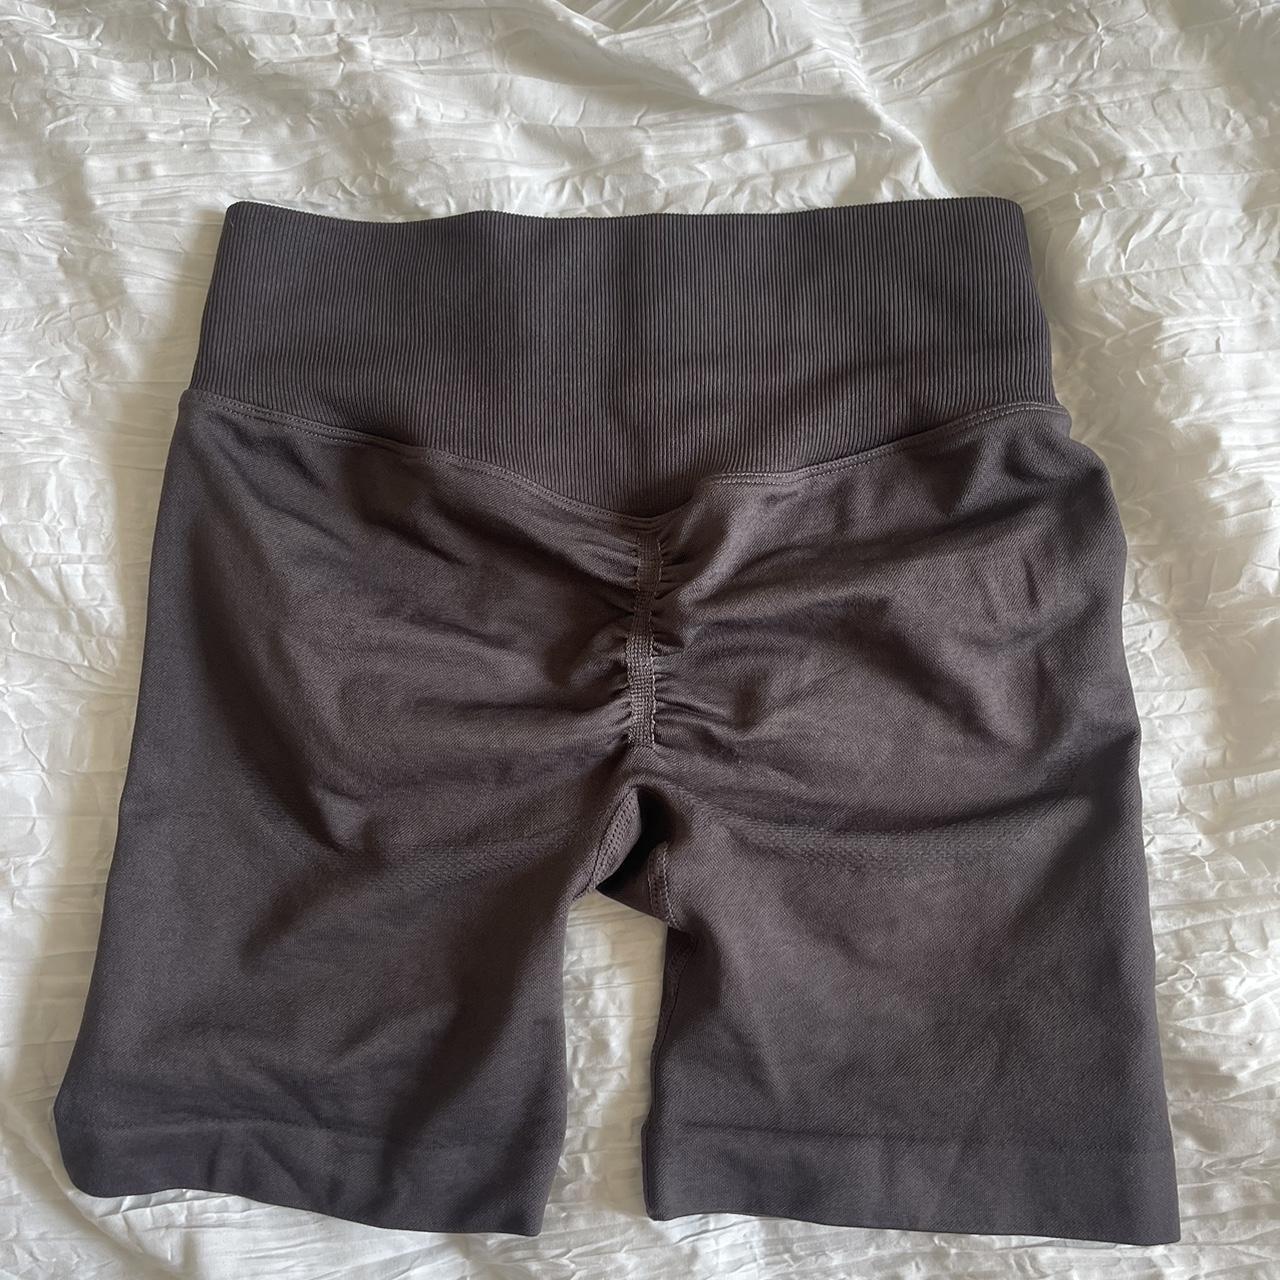 Alphalete Women's Brown and Black Shorts (3)